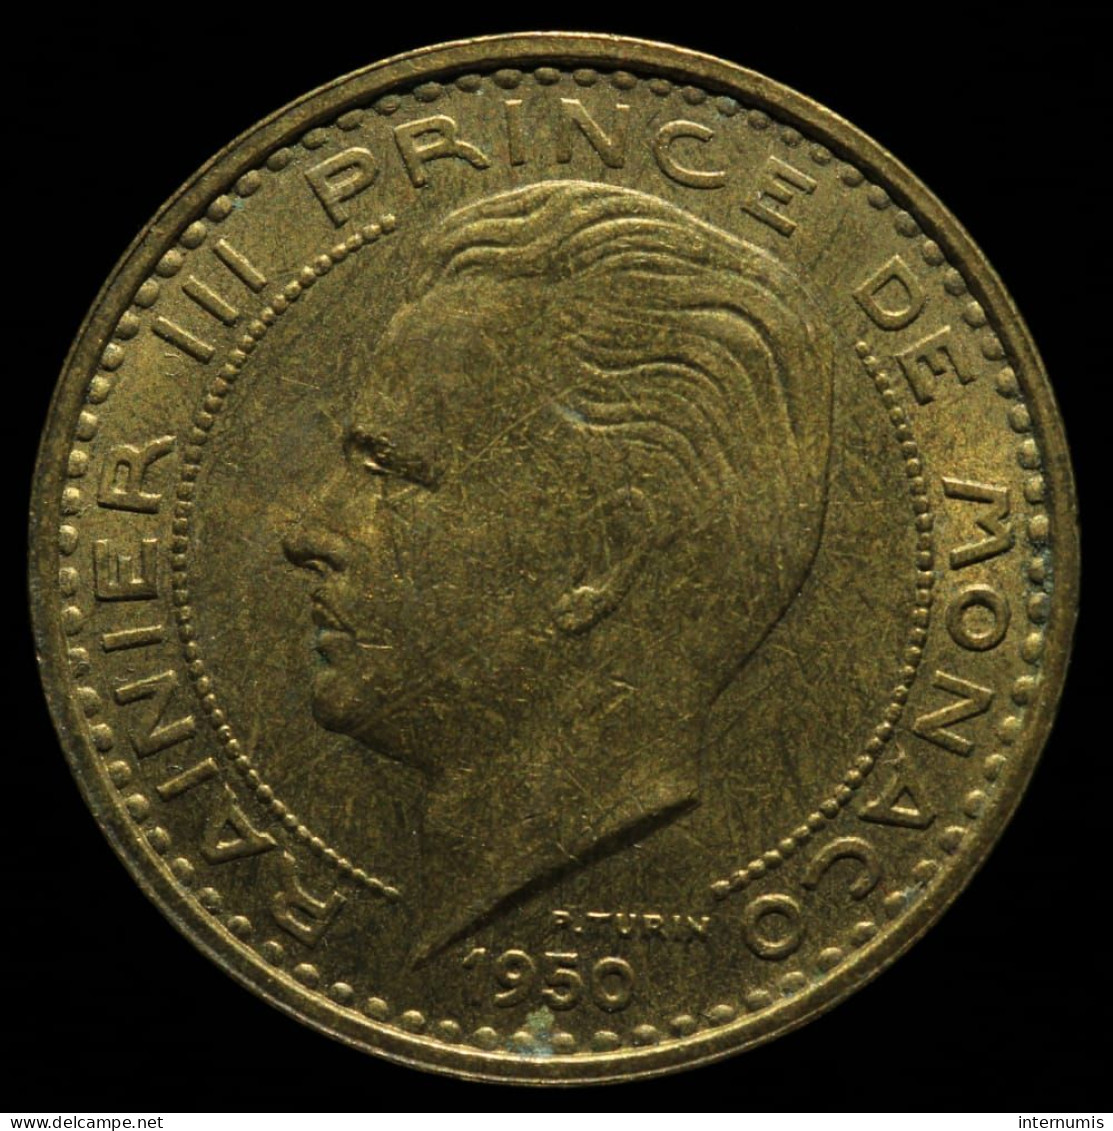 Monaco, Rainier III, 50 Francs, 1950, Cu-Al, NC (UNC), KM#132, G.MC141 - 1949-1956 Franchi Antichi